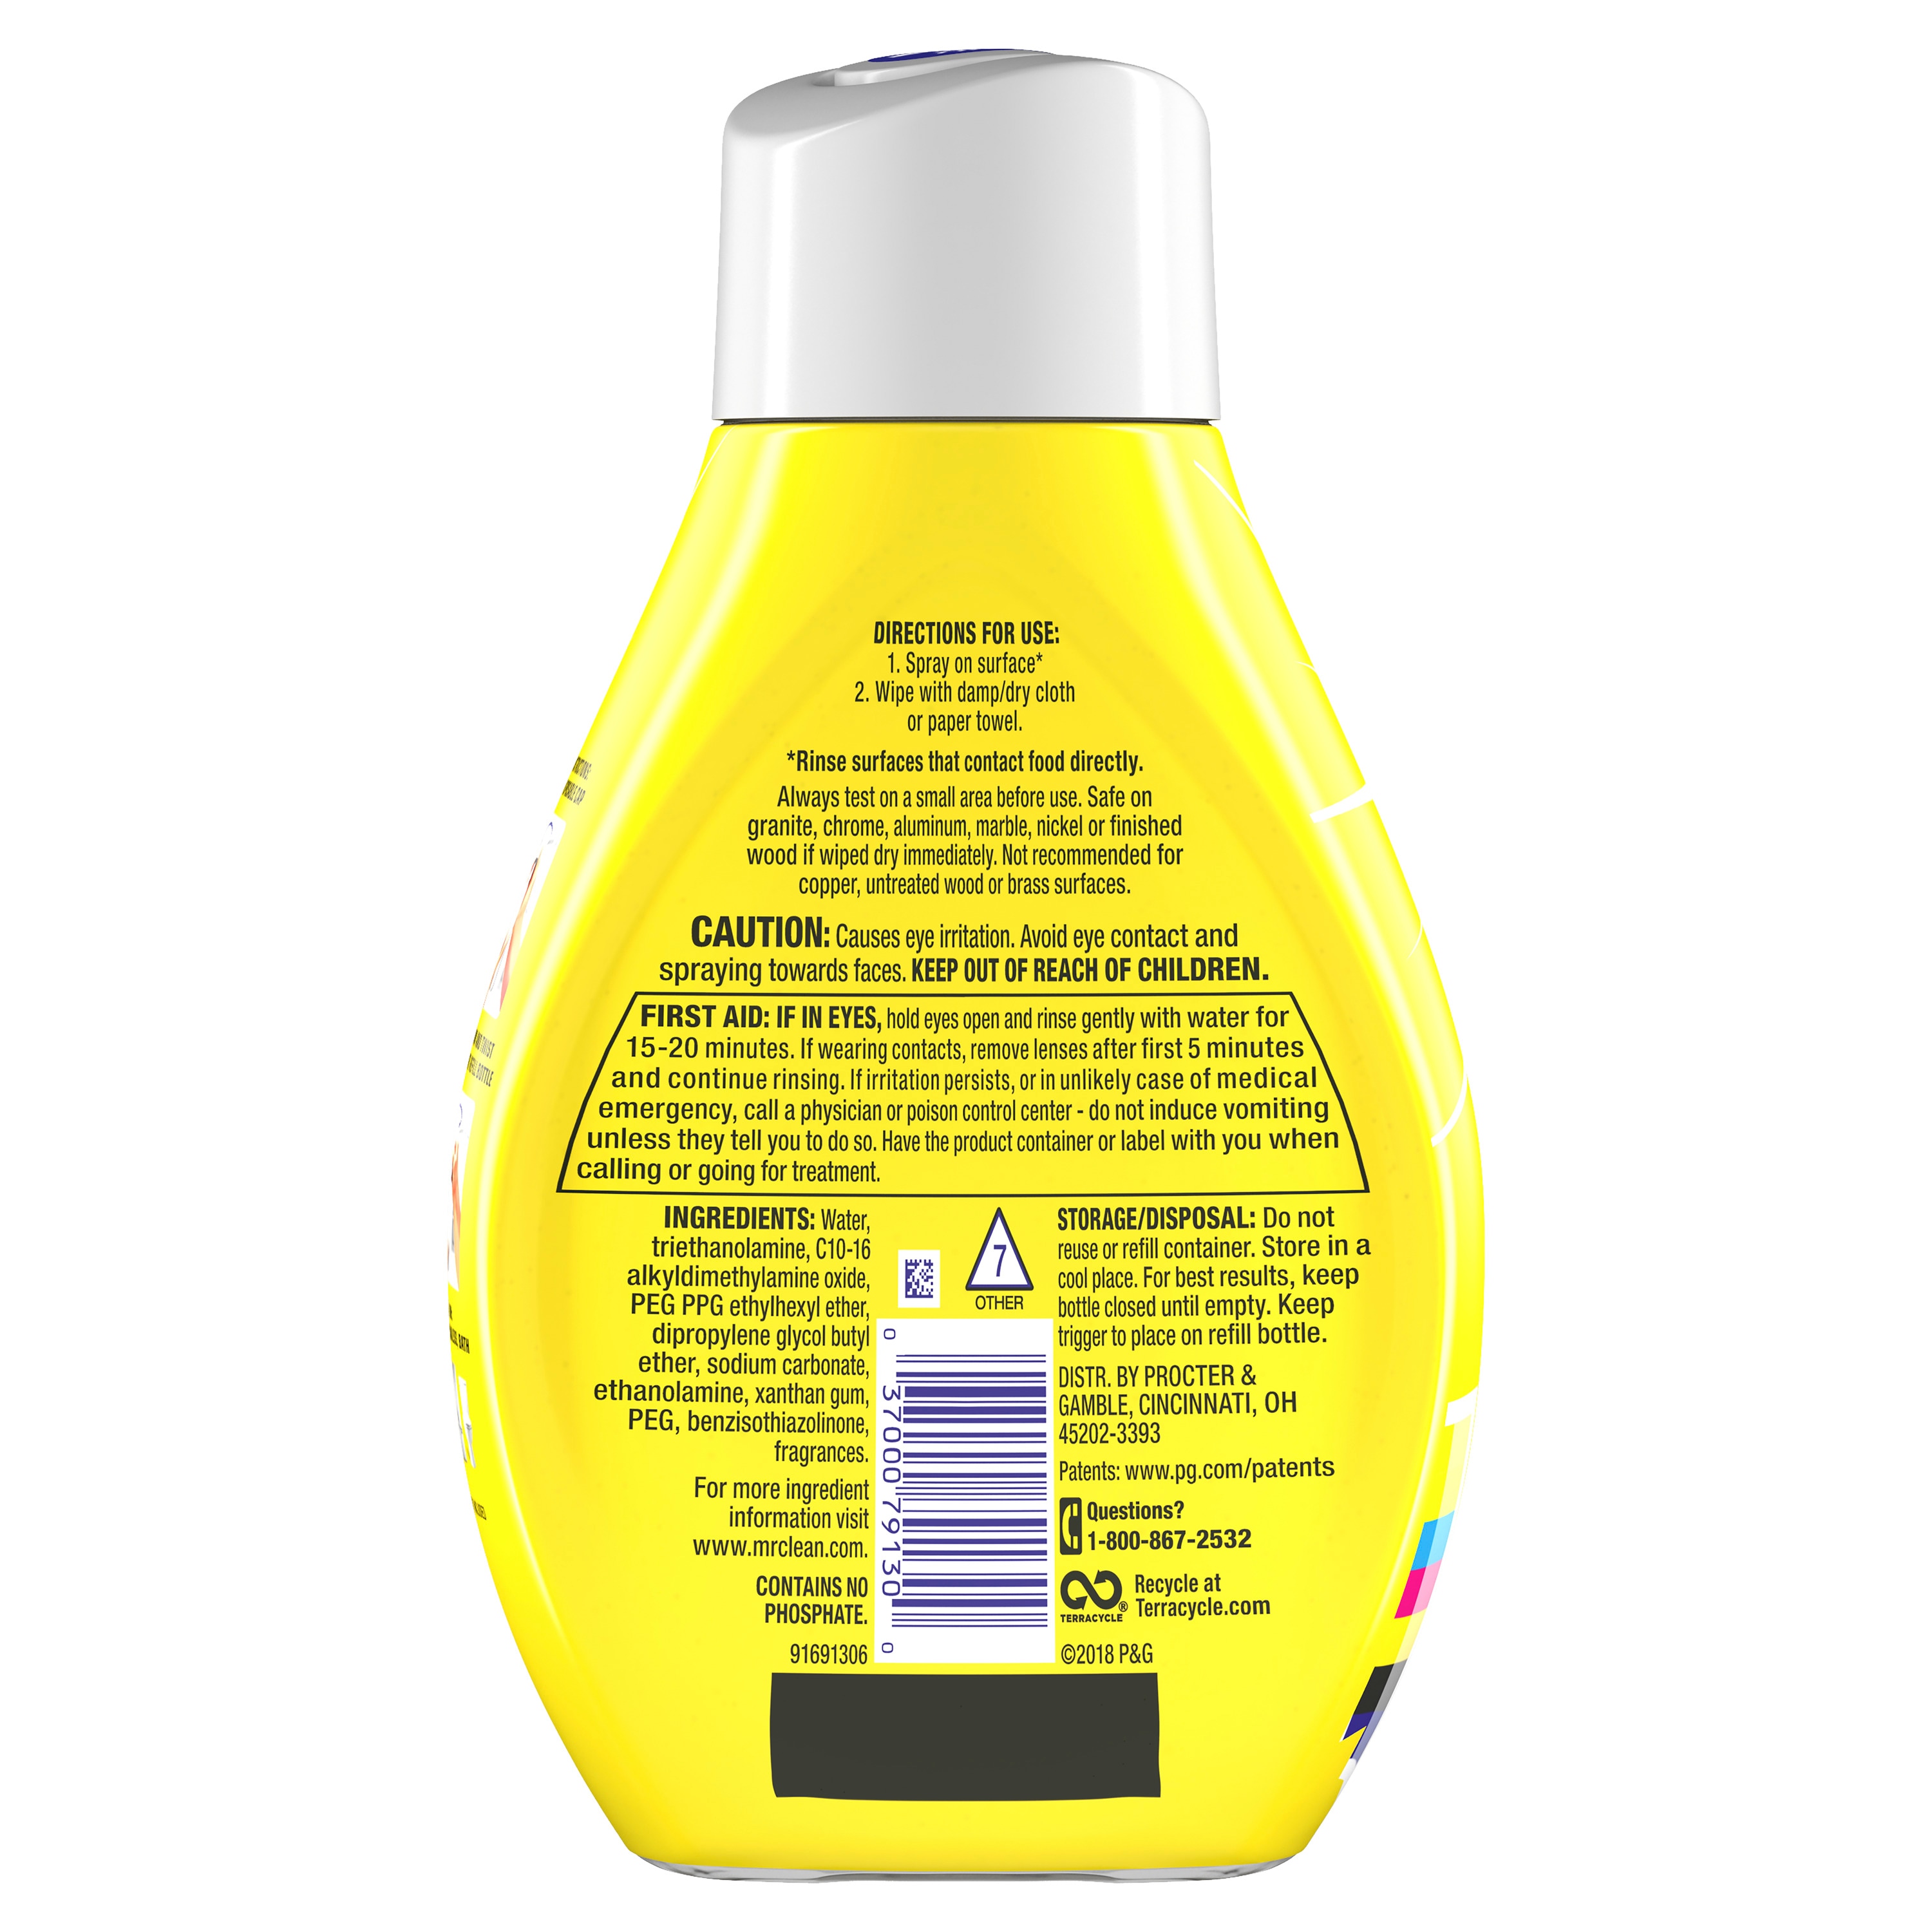 Find the latest online Mr Clean - Clean Freak Deep Cleaning Mist Spray  473ml + 913ml Refill Costco